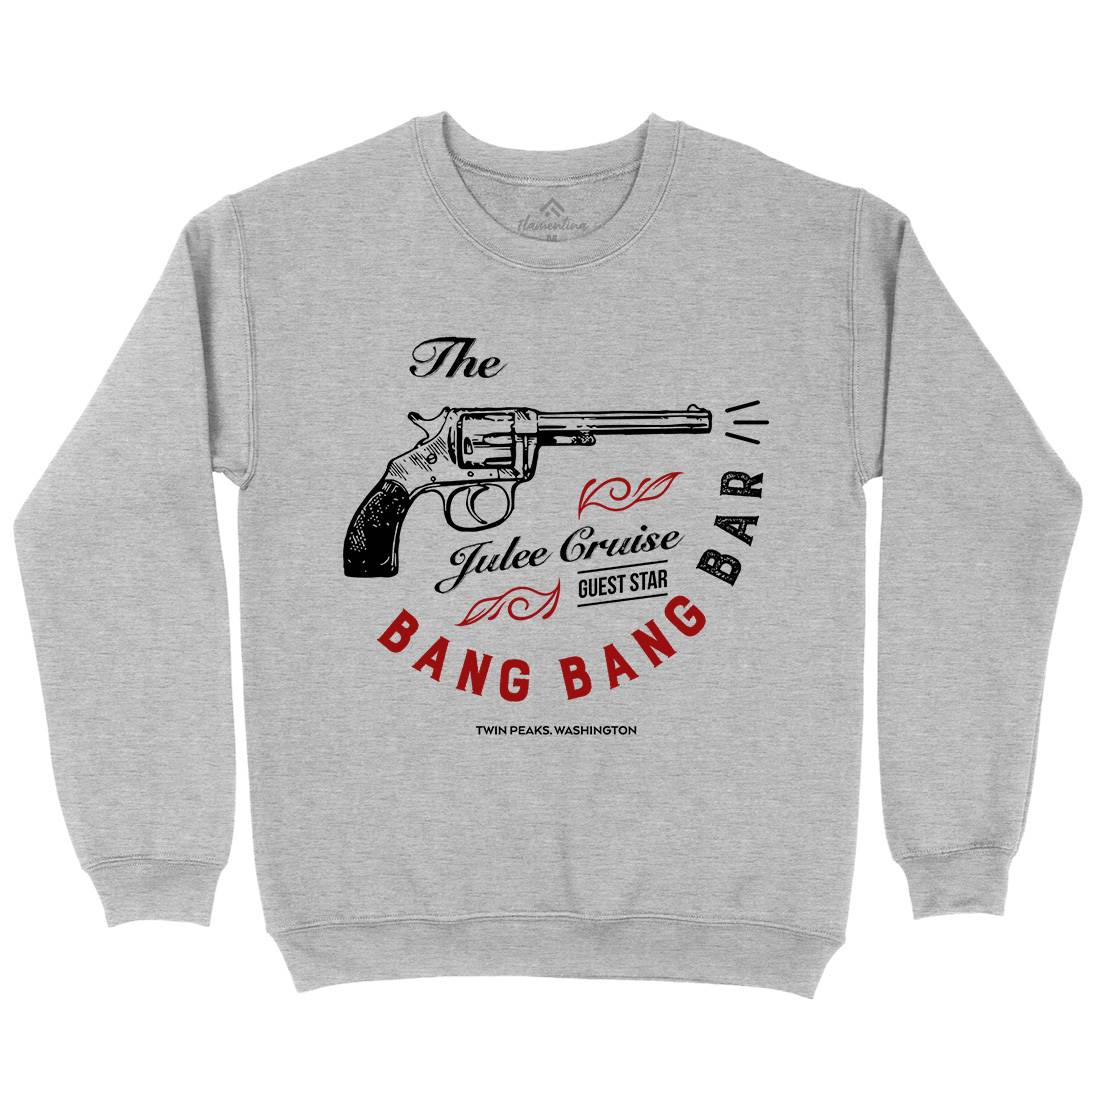 Bang Bang Bar Kids Crew Neck Sweatshirt Drinks D224